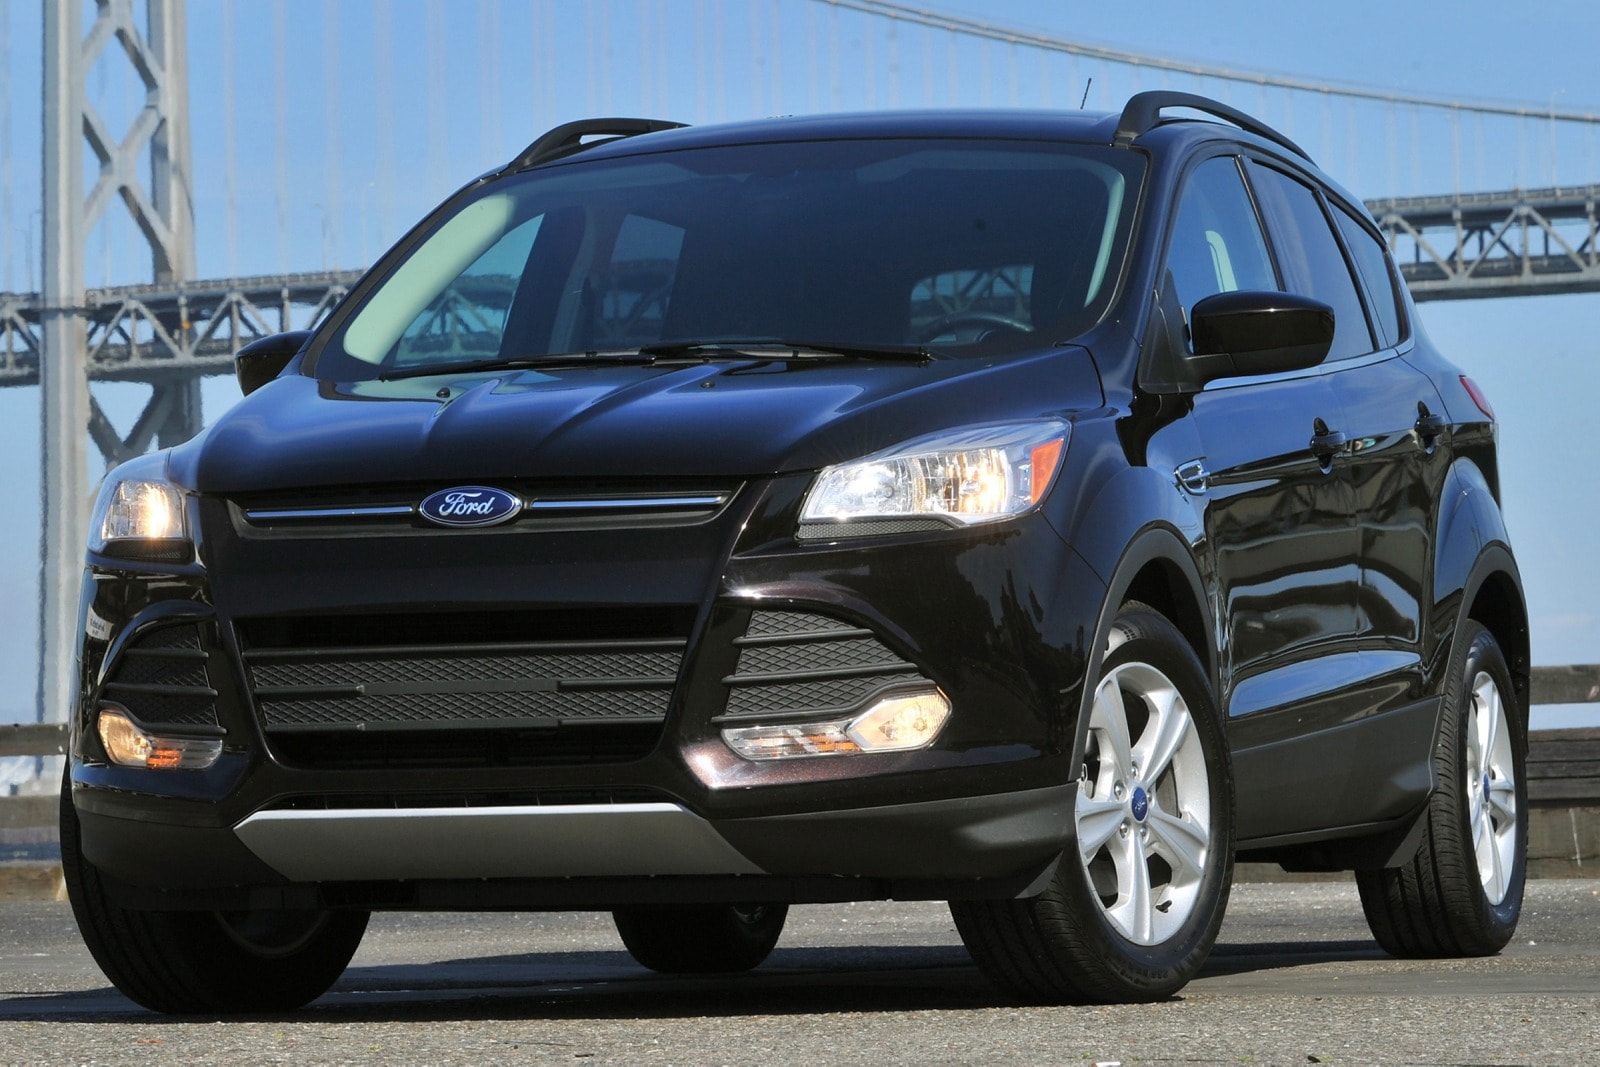 2014 Ford Escape Review & Ratings | Edmunds